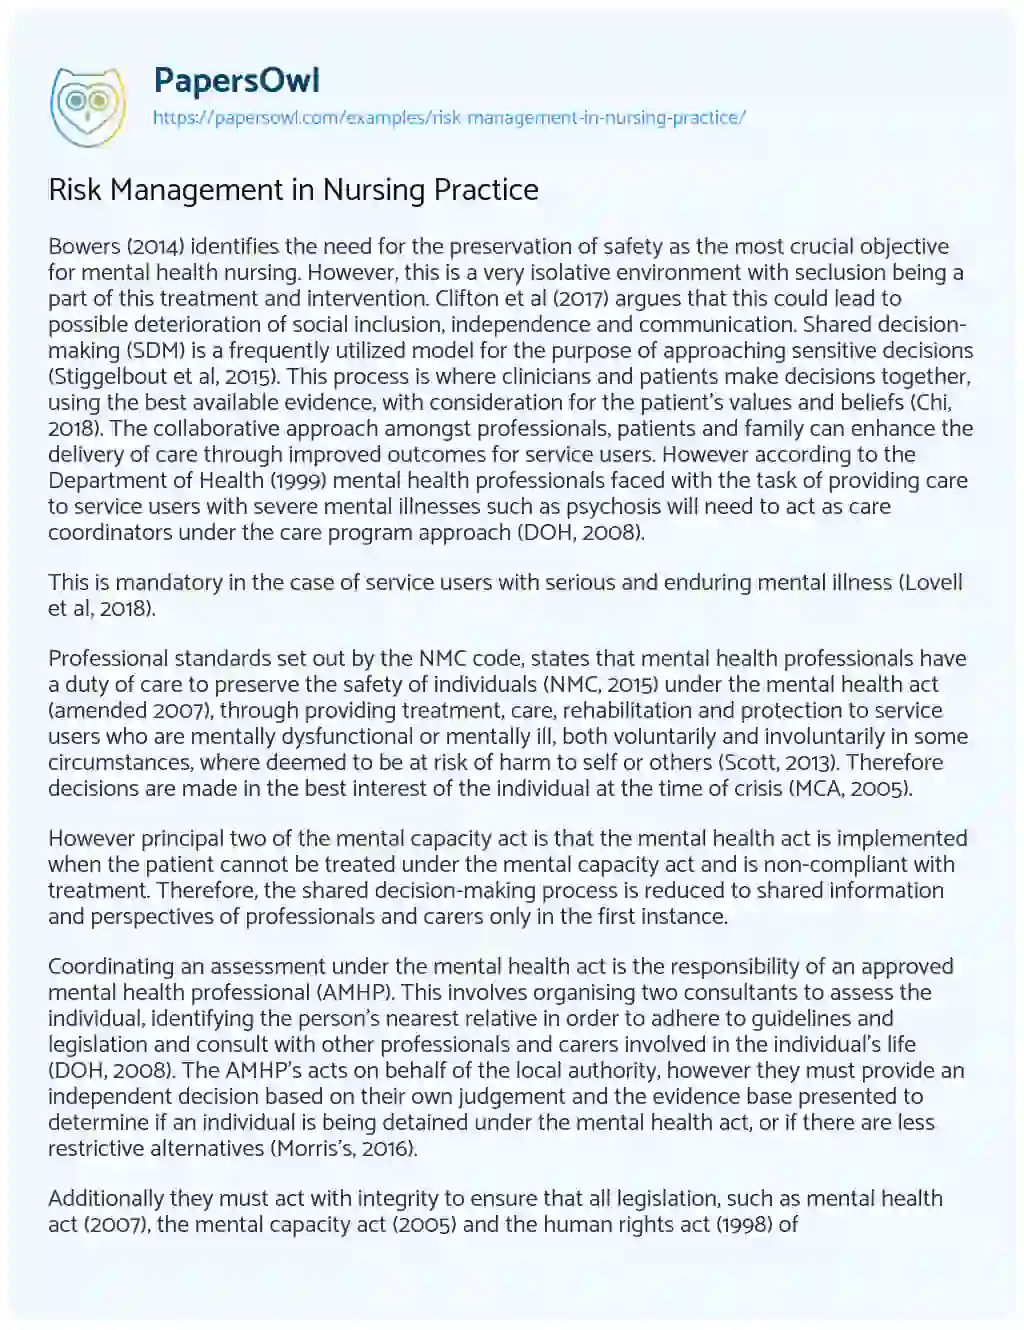 Essay on Risk Management in Nursing Practice